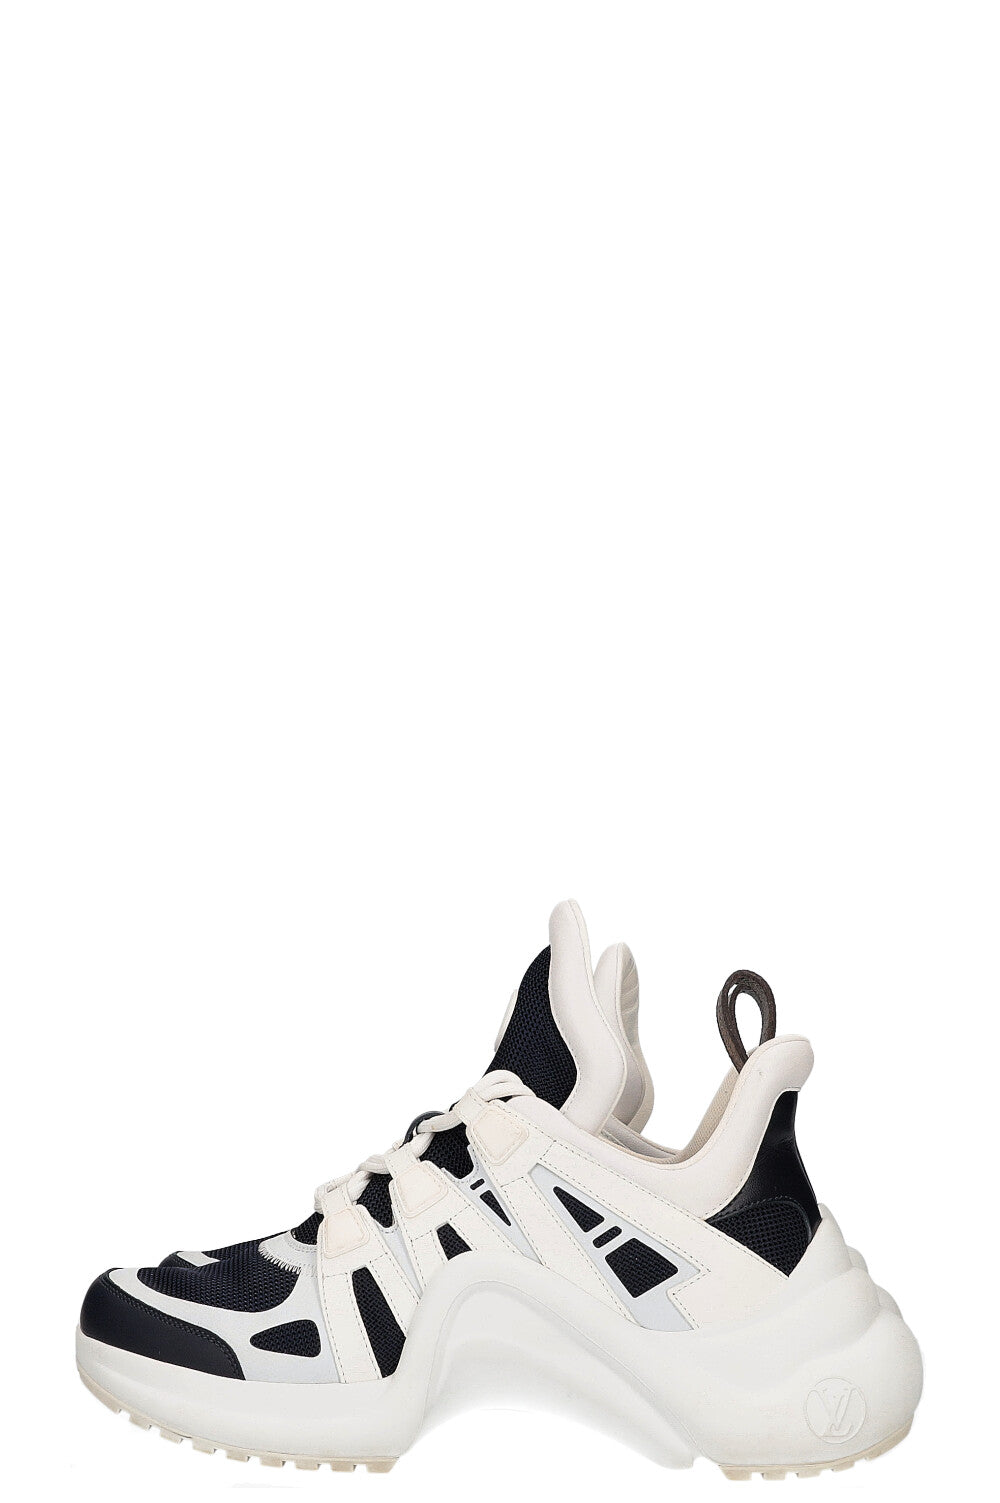 LOUIS VUITTON Archlight Sneakers Navy/White